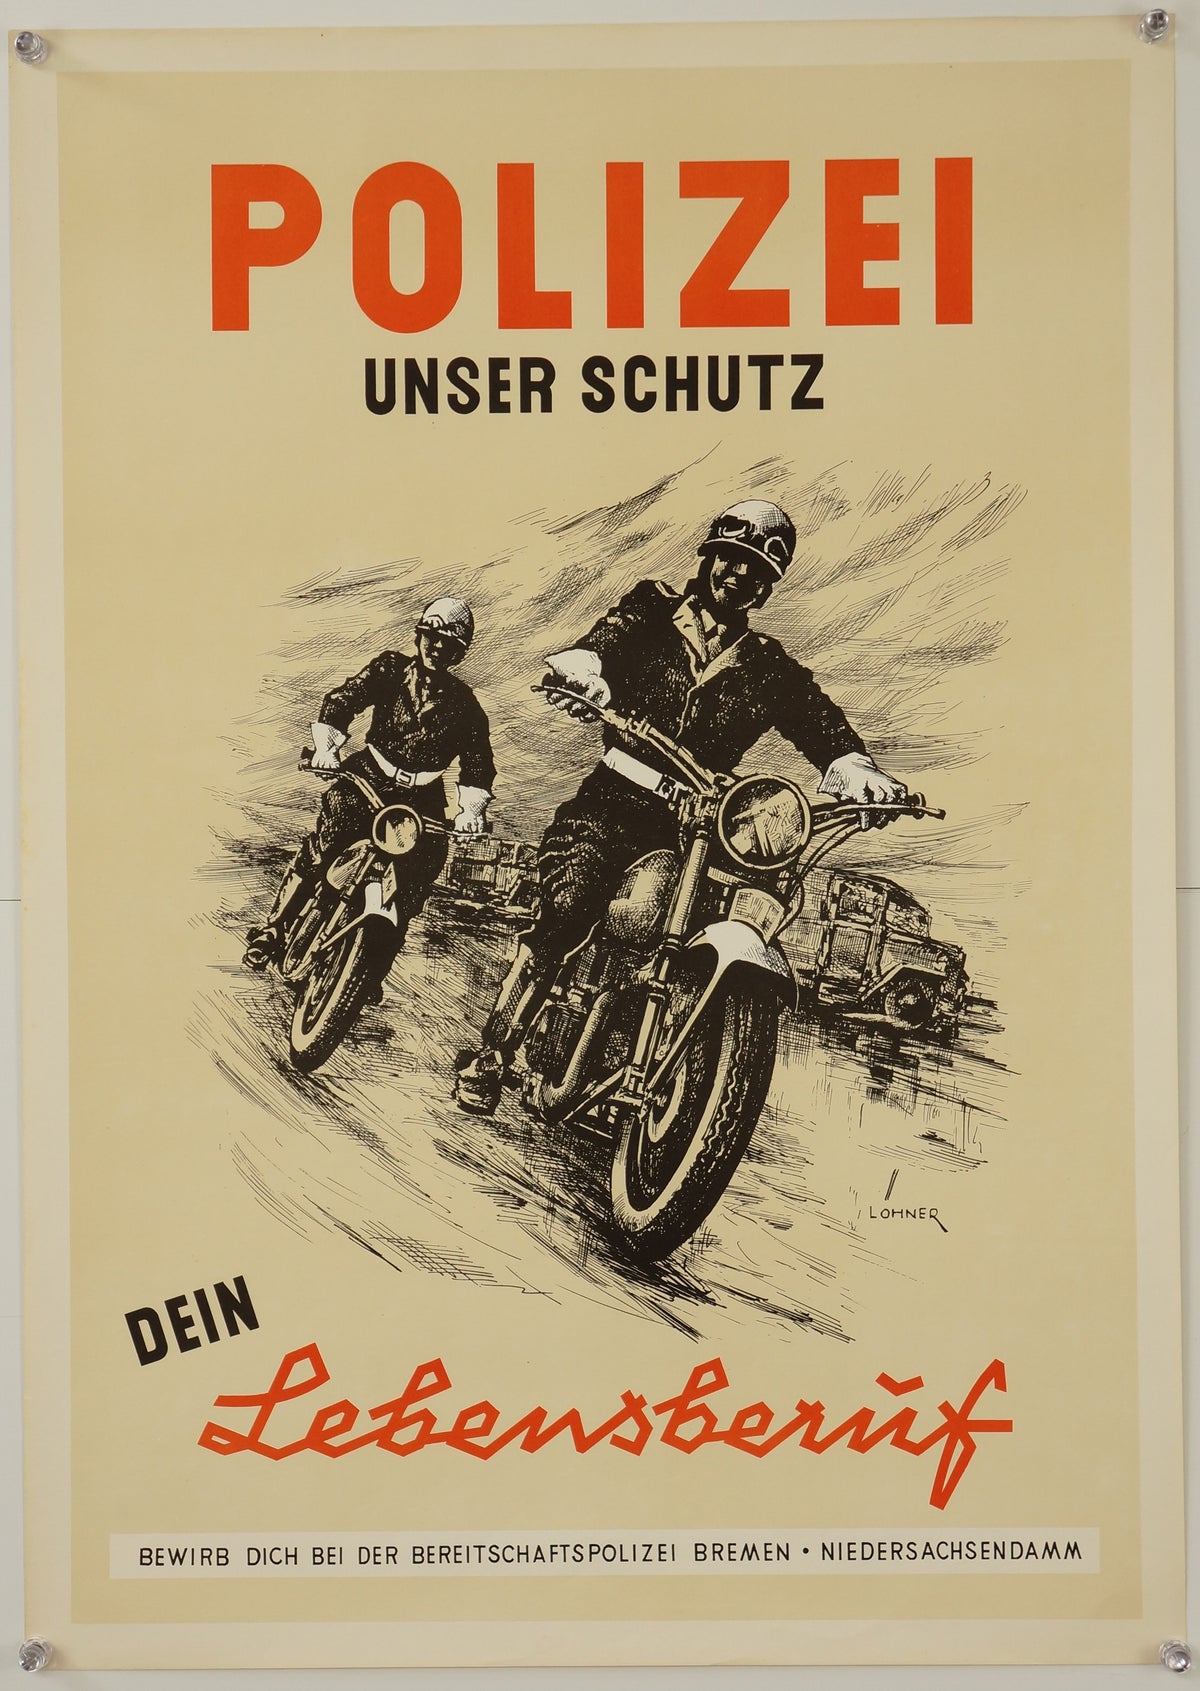 Polizei- German Riot Police - RESTORATION - Authentic Vintage Poster